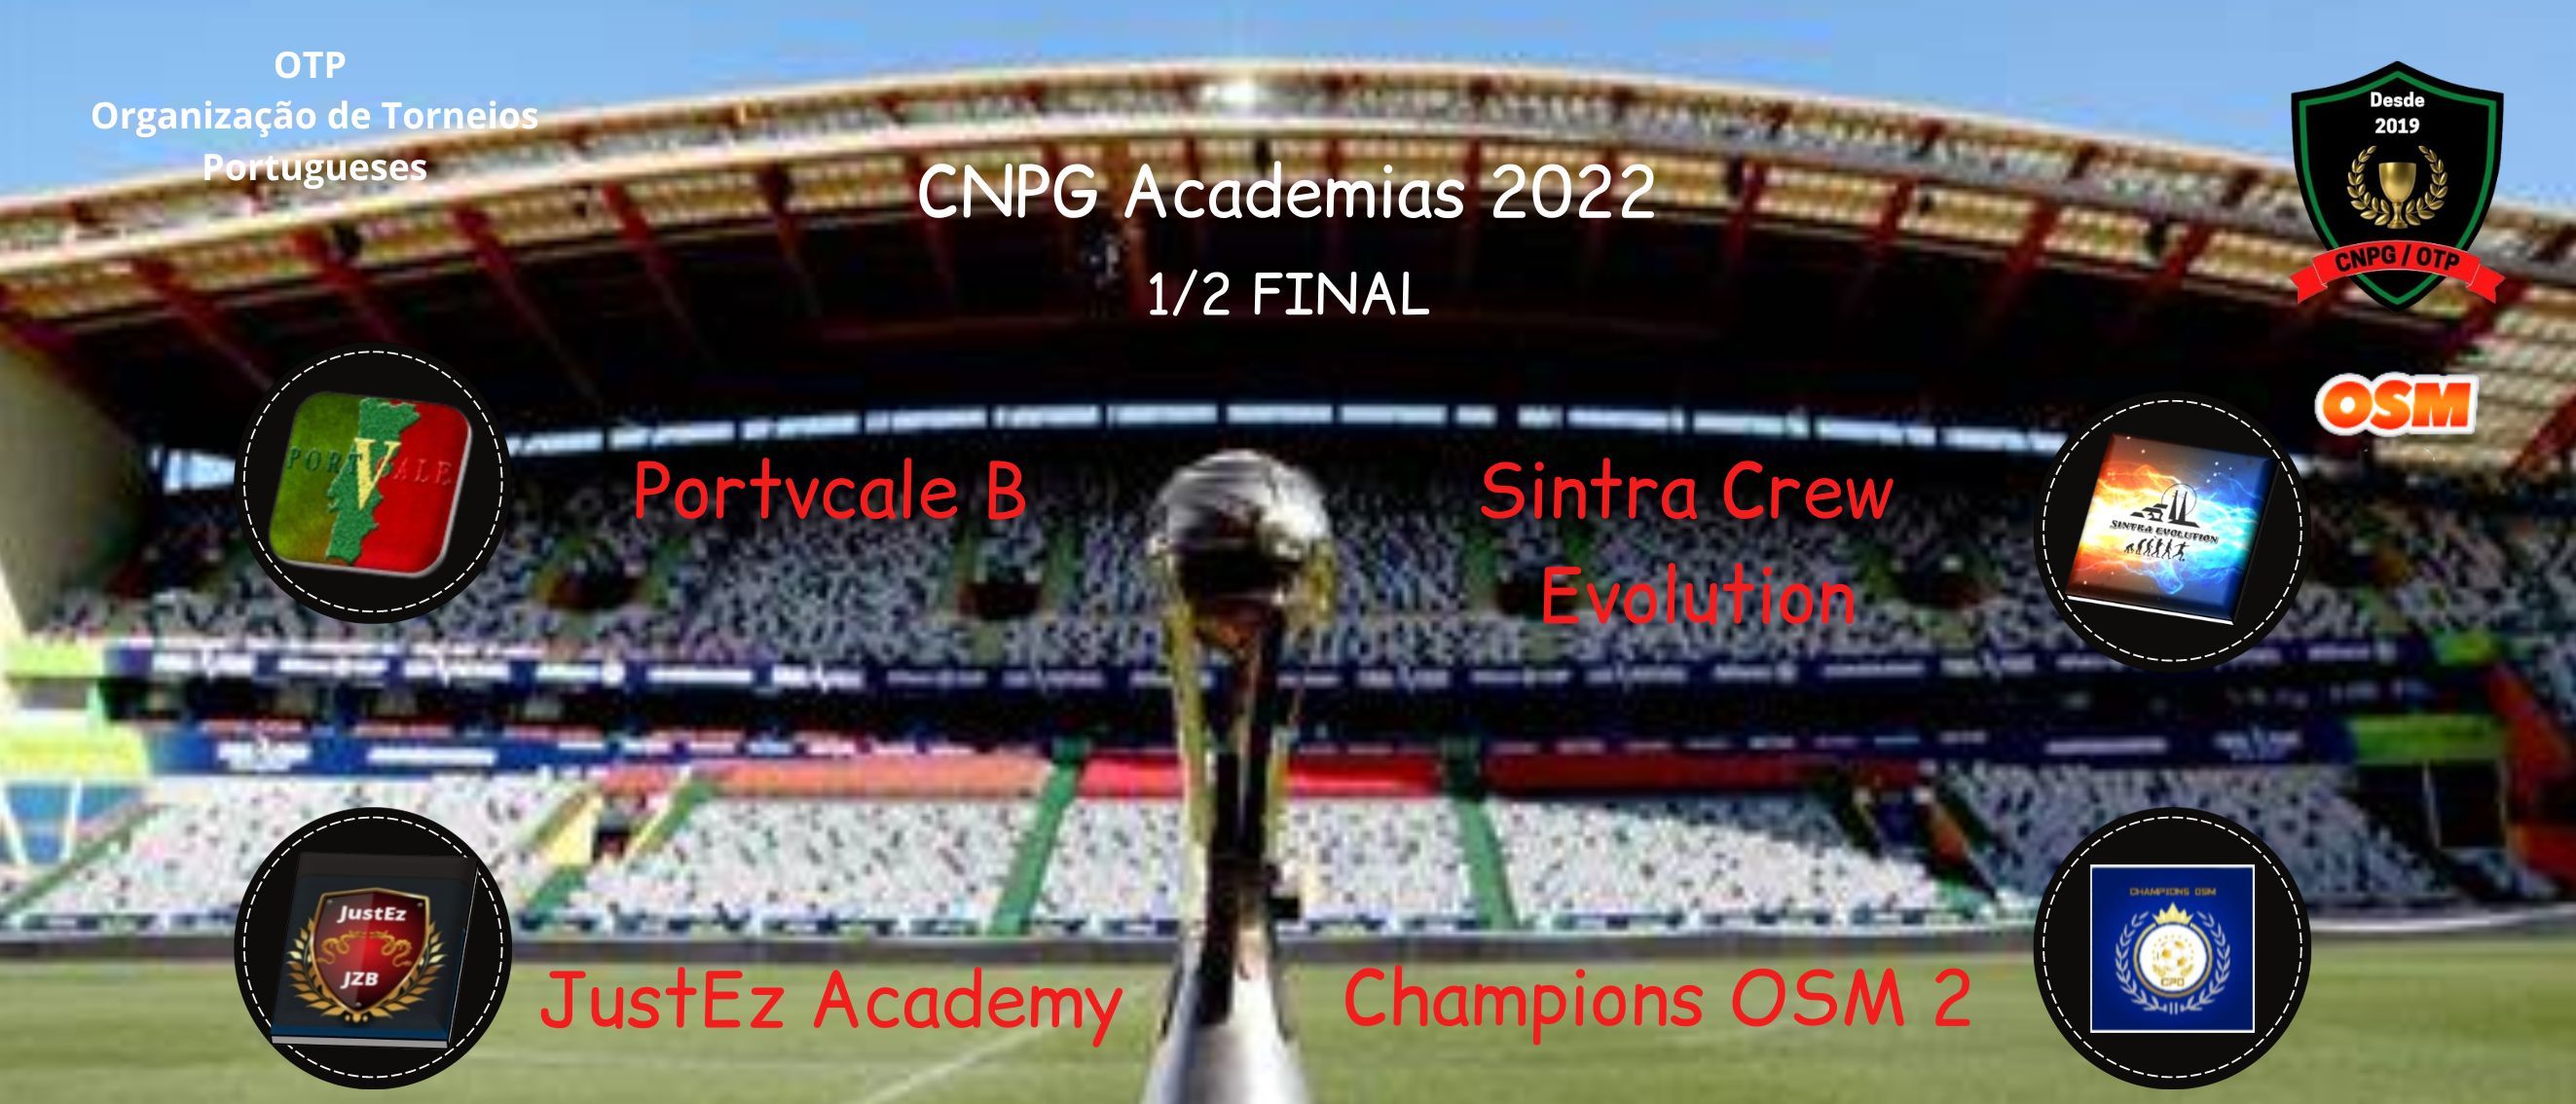 CNPG Academias logo 2022 (1).jpg